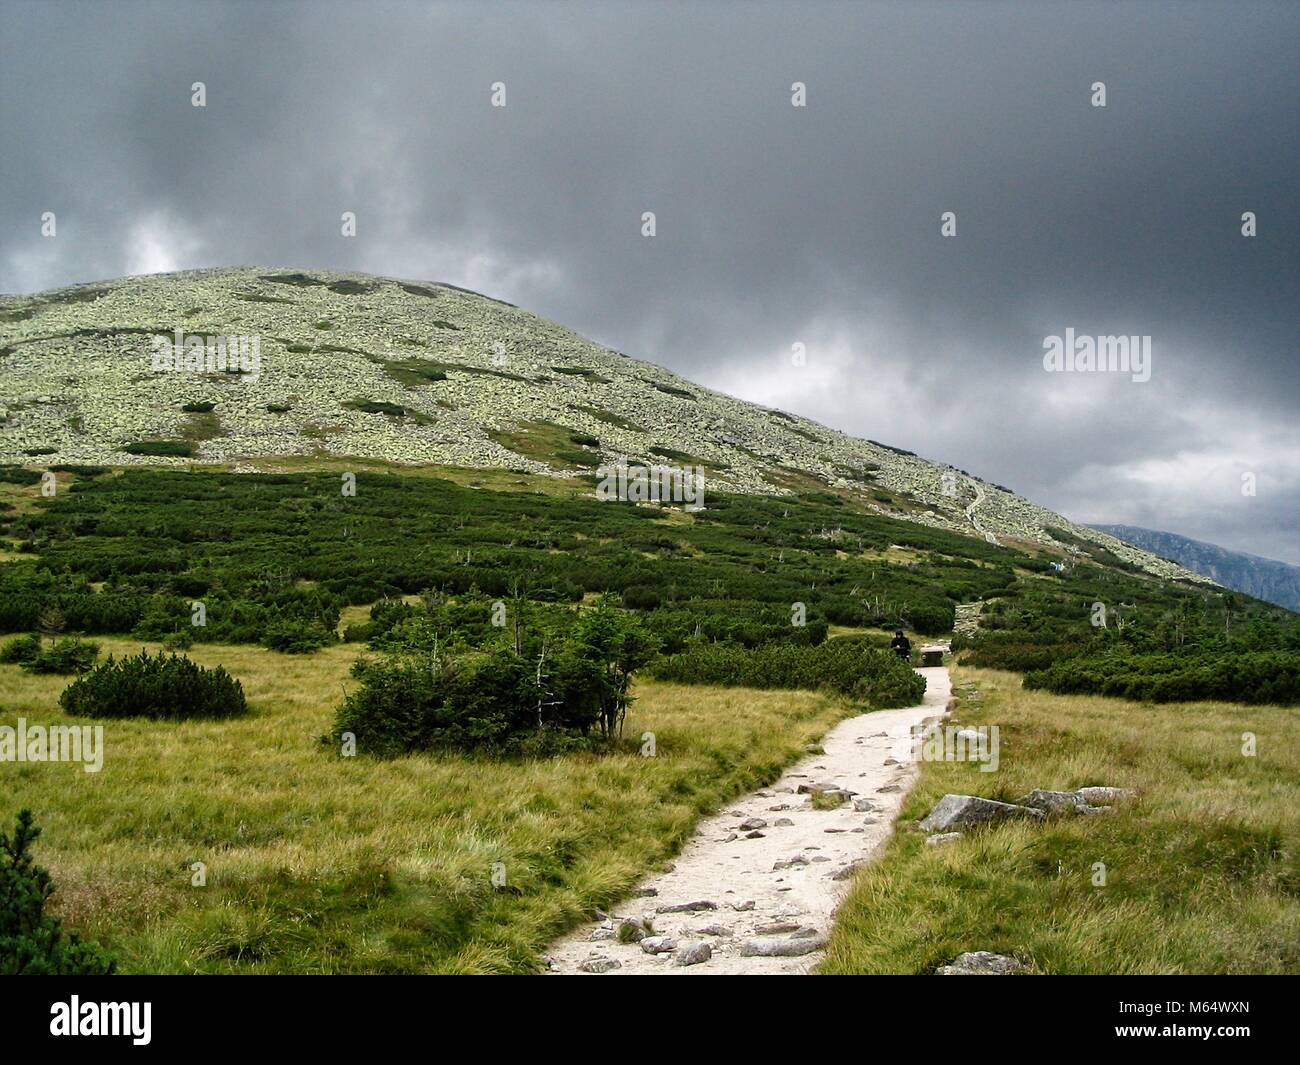 Stony hill with green vegetation and stony path under heavy rain clouds Stock Photo